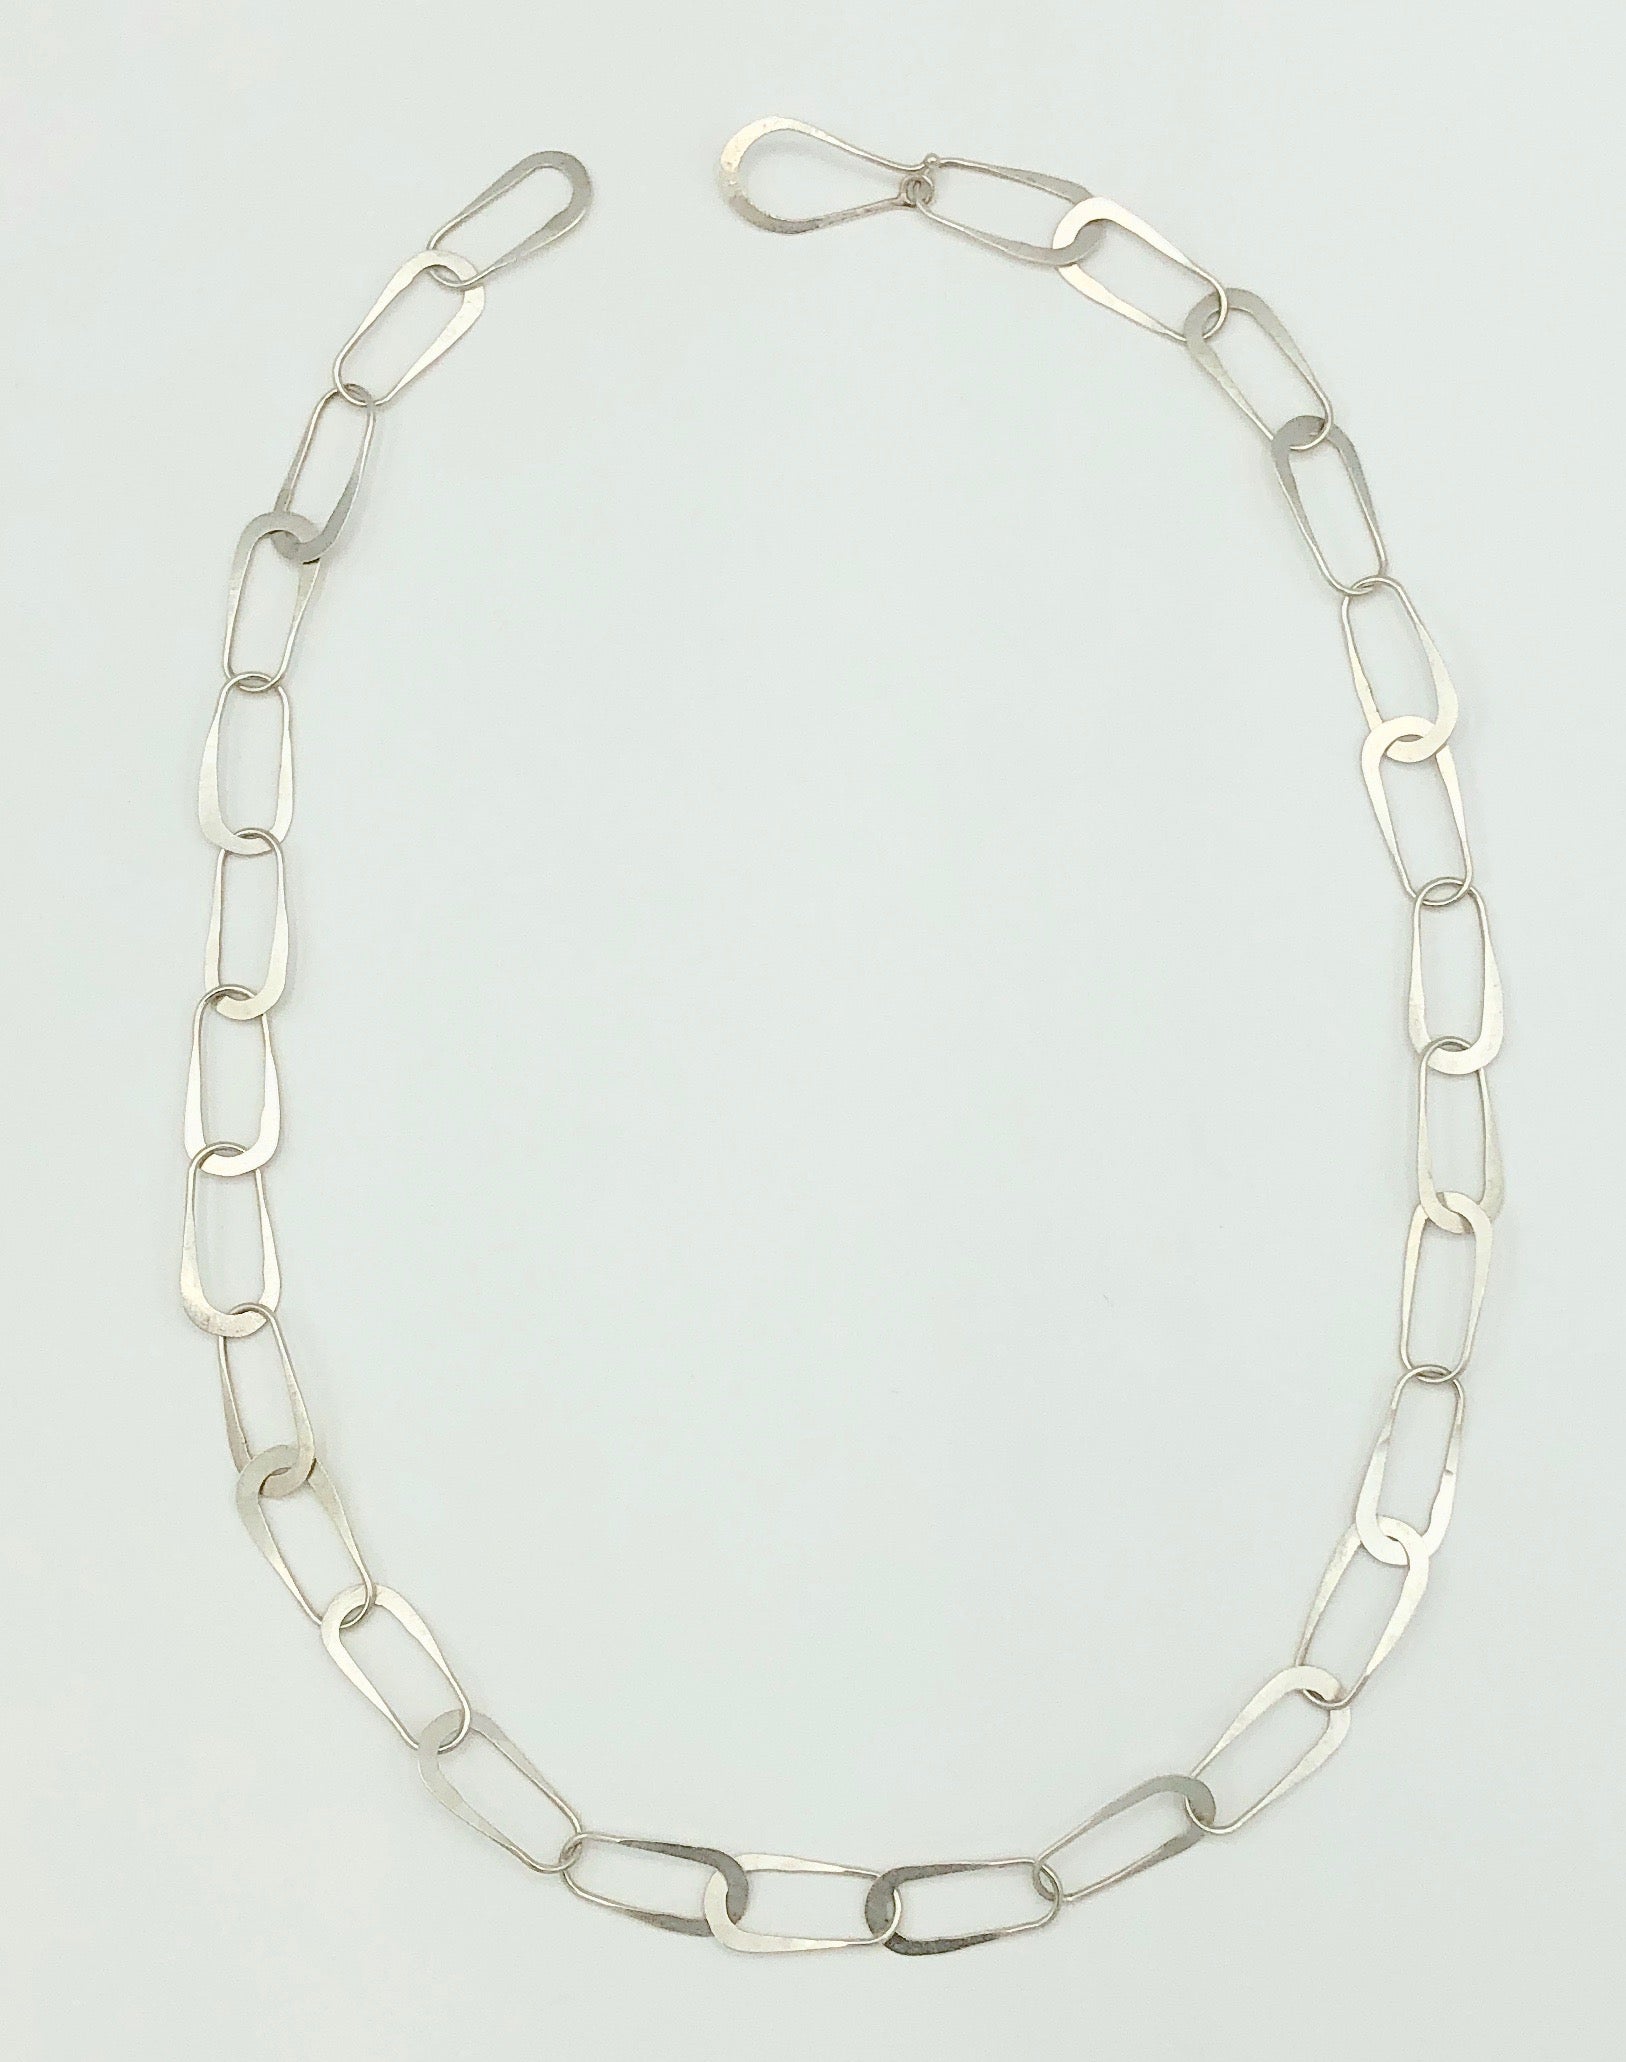 Silver Hammered Oval Bracelet - Ethical | Drumgreenagh Irish Design Store